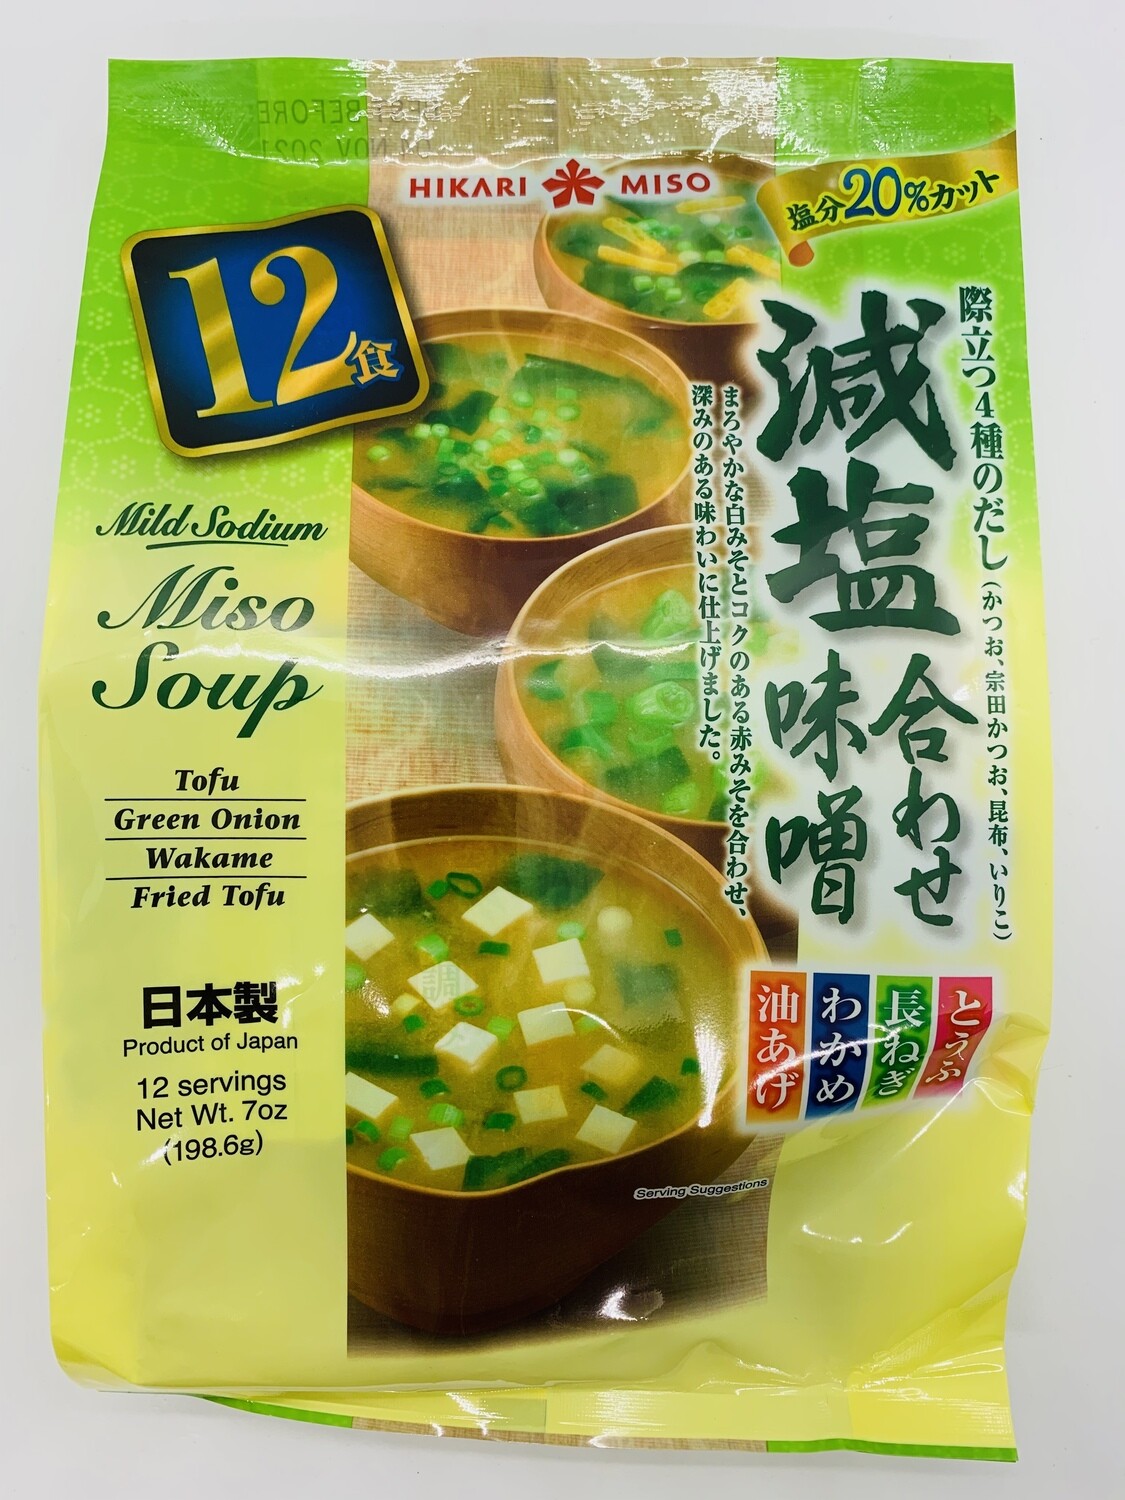 HIKARI Miso Soup Mild Sodium 12